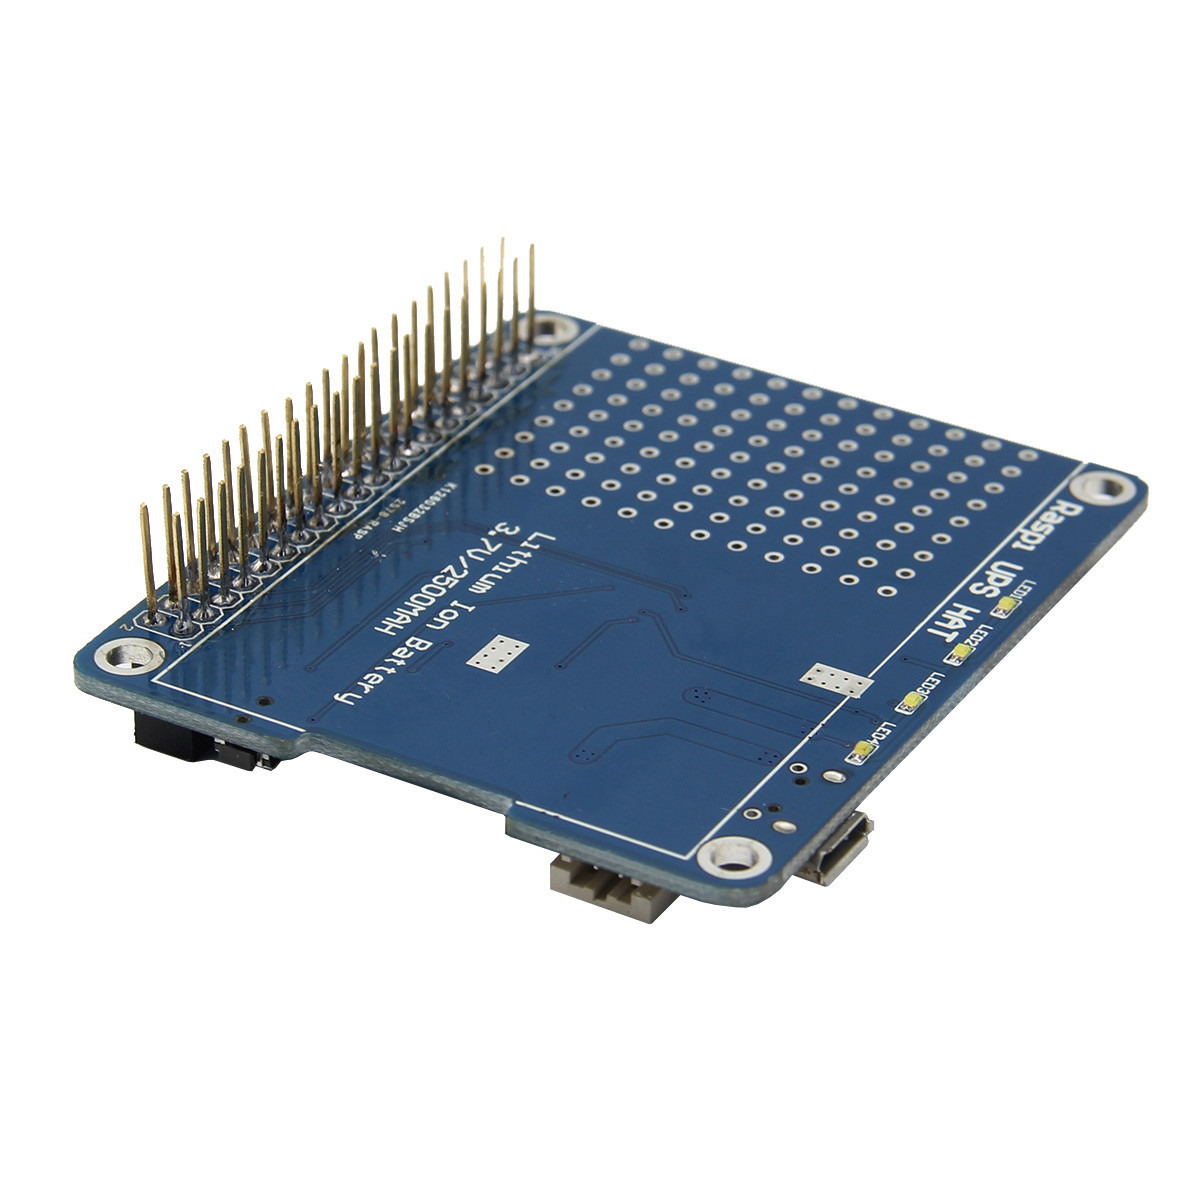 Ups Hat Board Module 2500mah Batterie au lithium pour Raspberry Pi